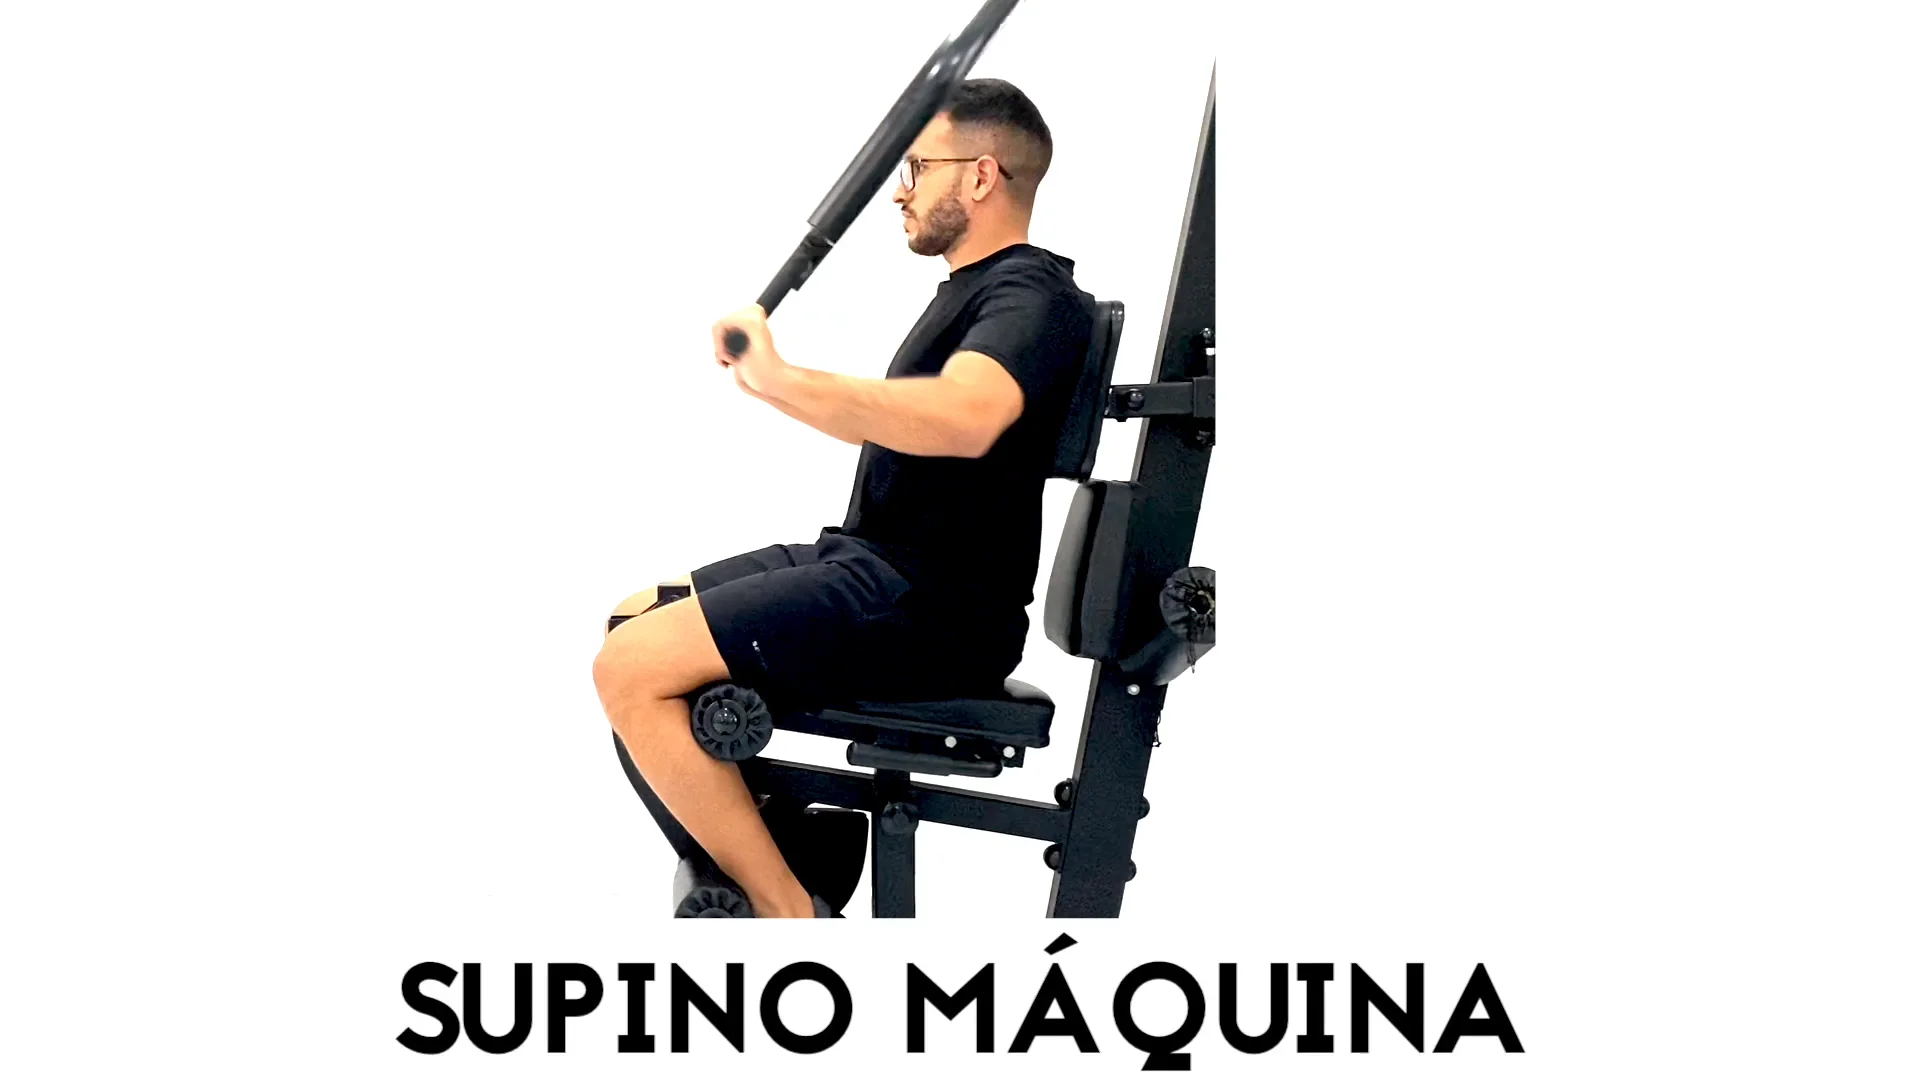 Supino Reto Máquina on Vimeo